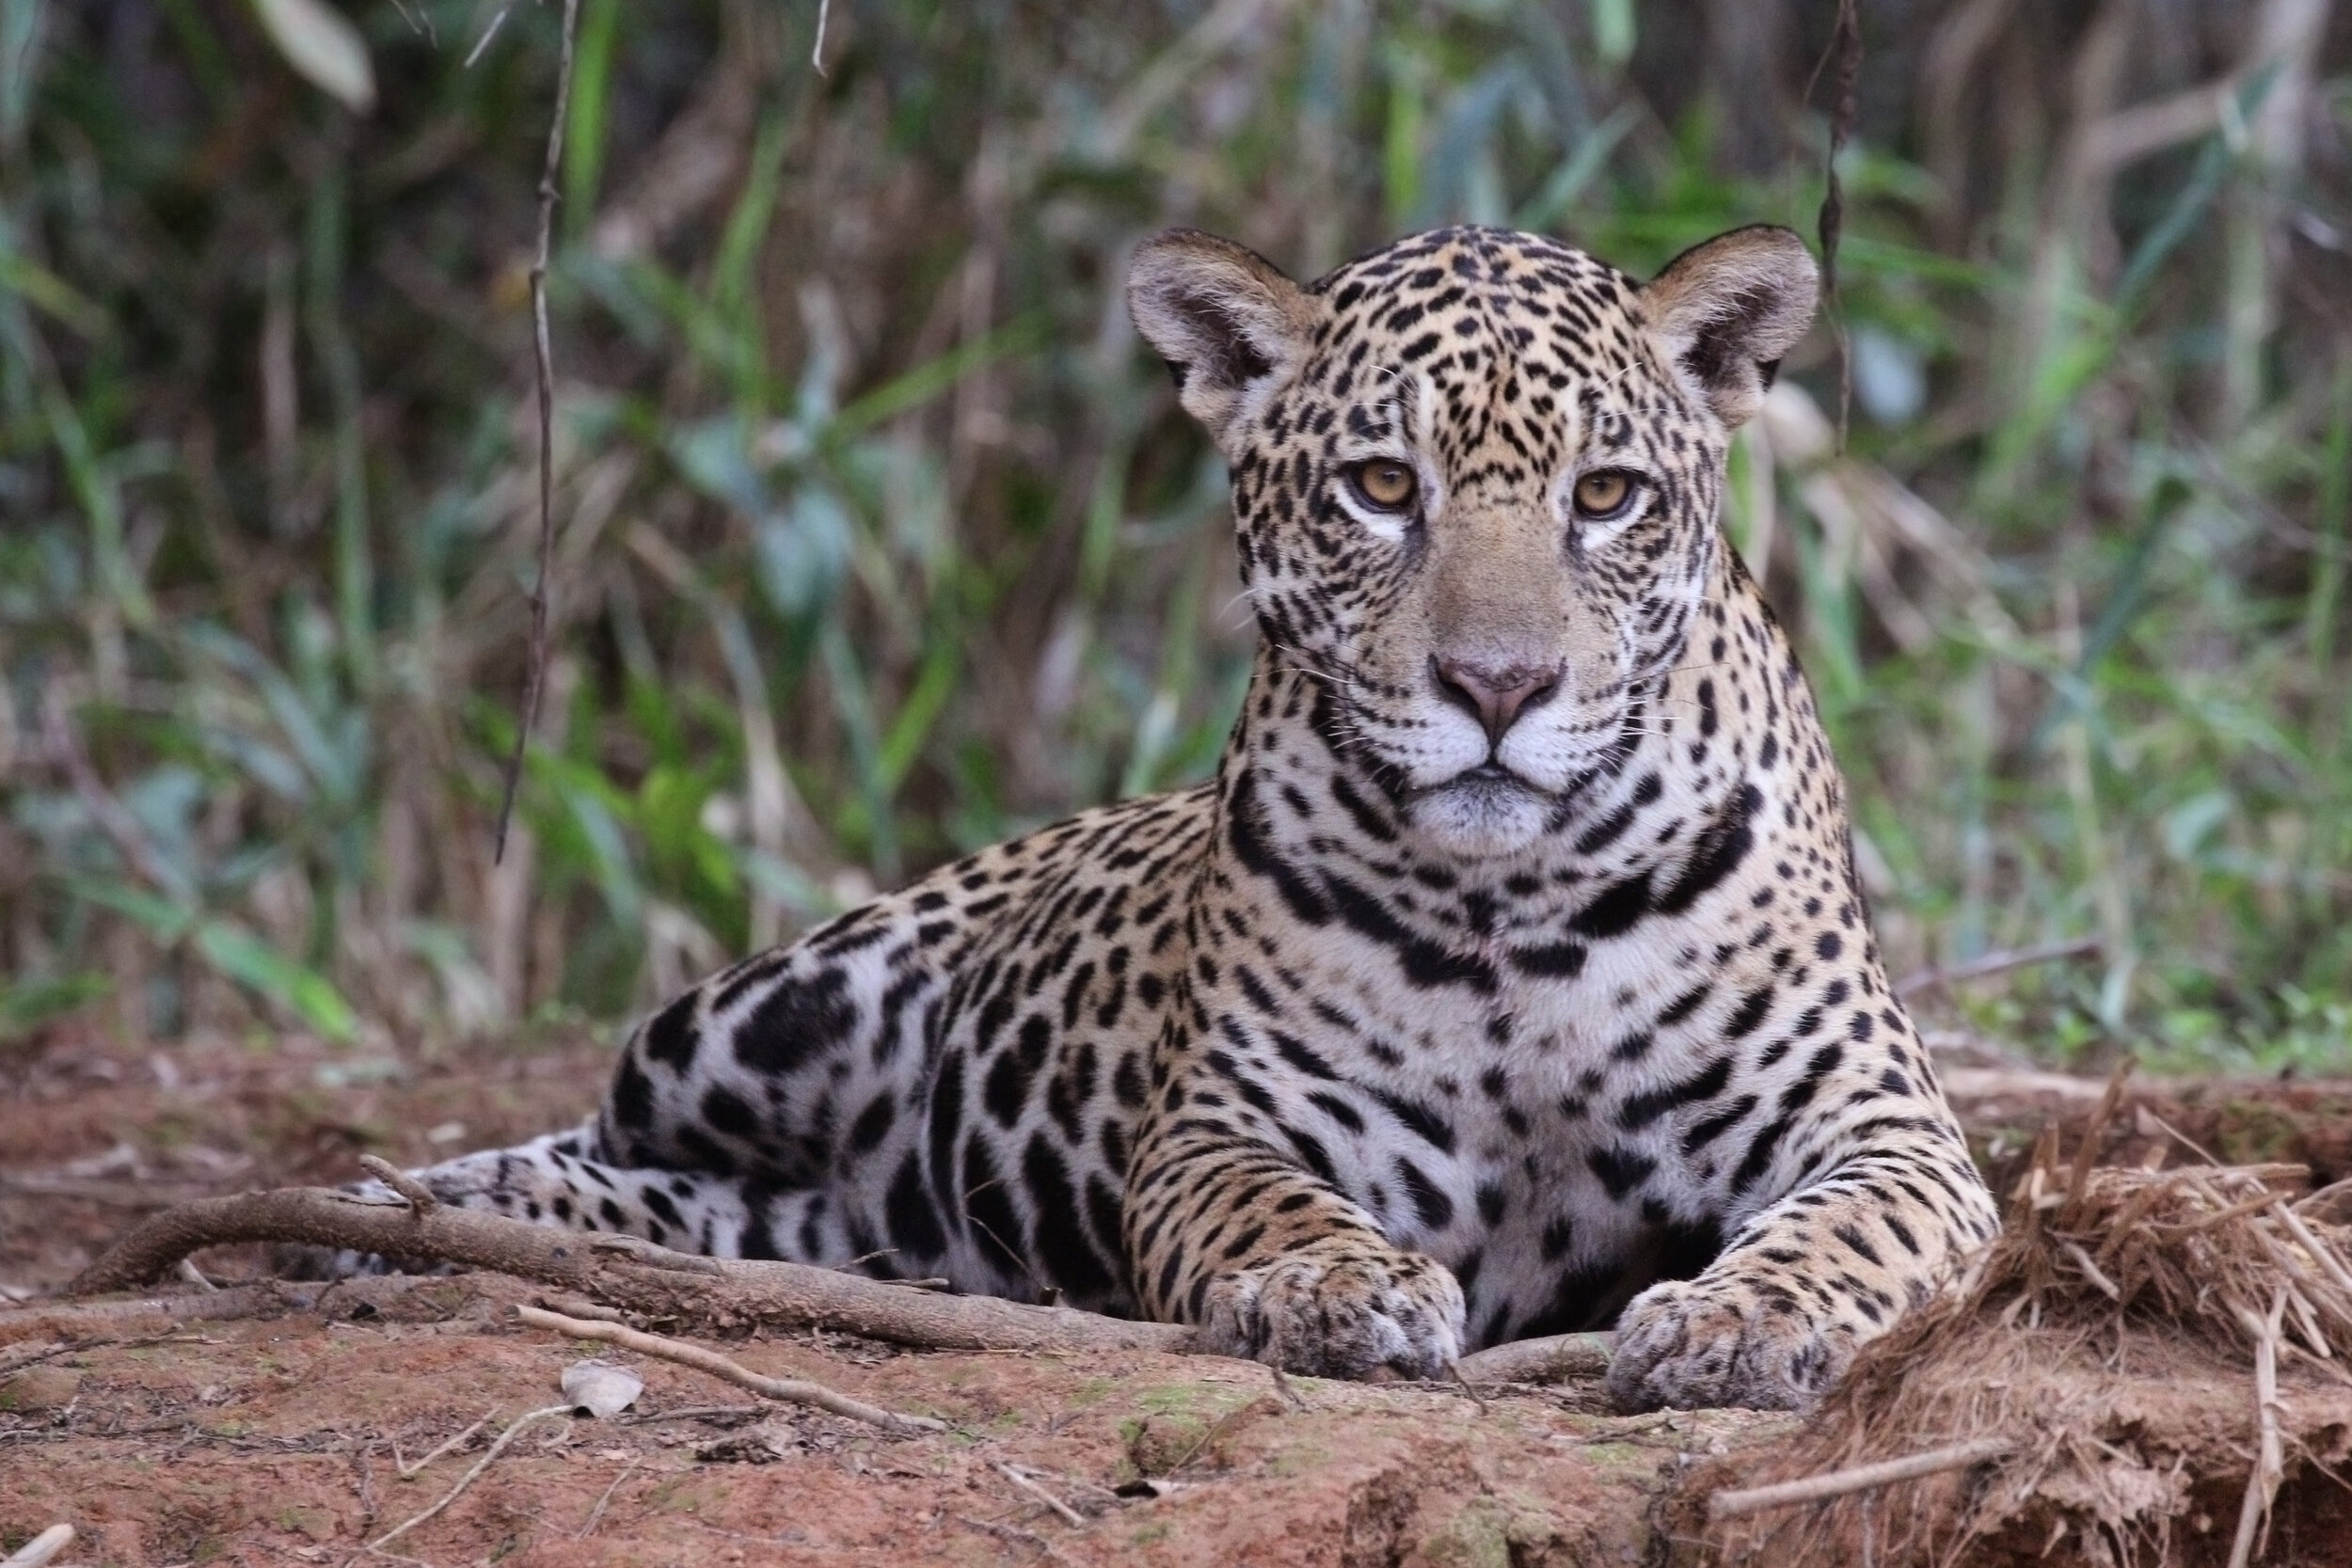 Charles J Sharp_A female jaguar at Piquiri River, Mato Grosso state, Brazil.jpeg